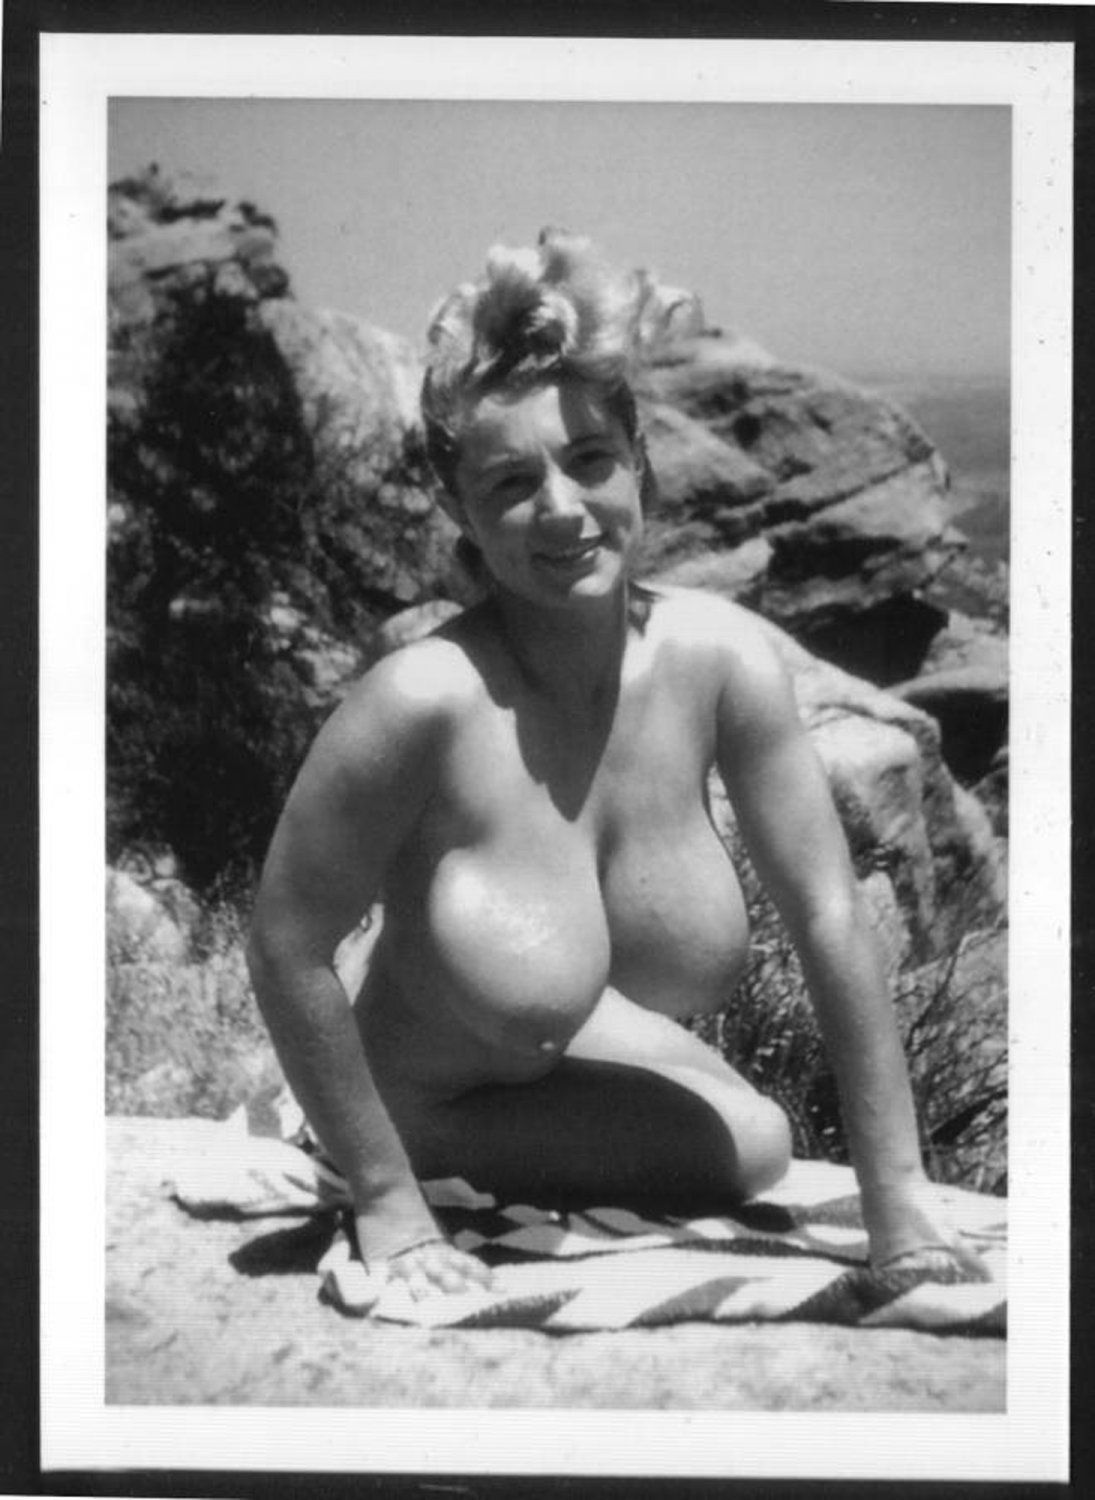 Joan blondell nude photos.